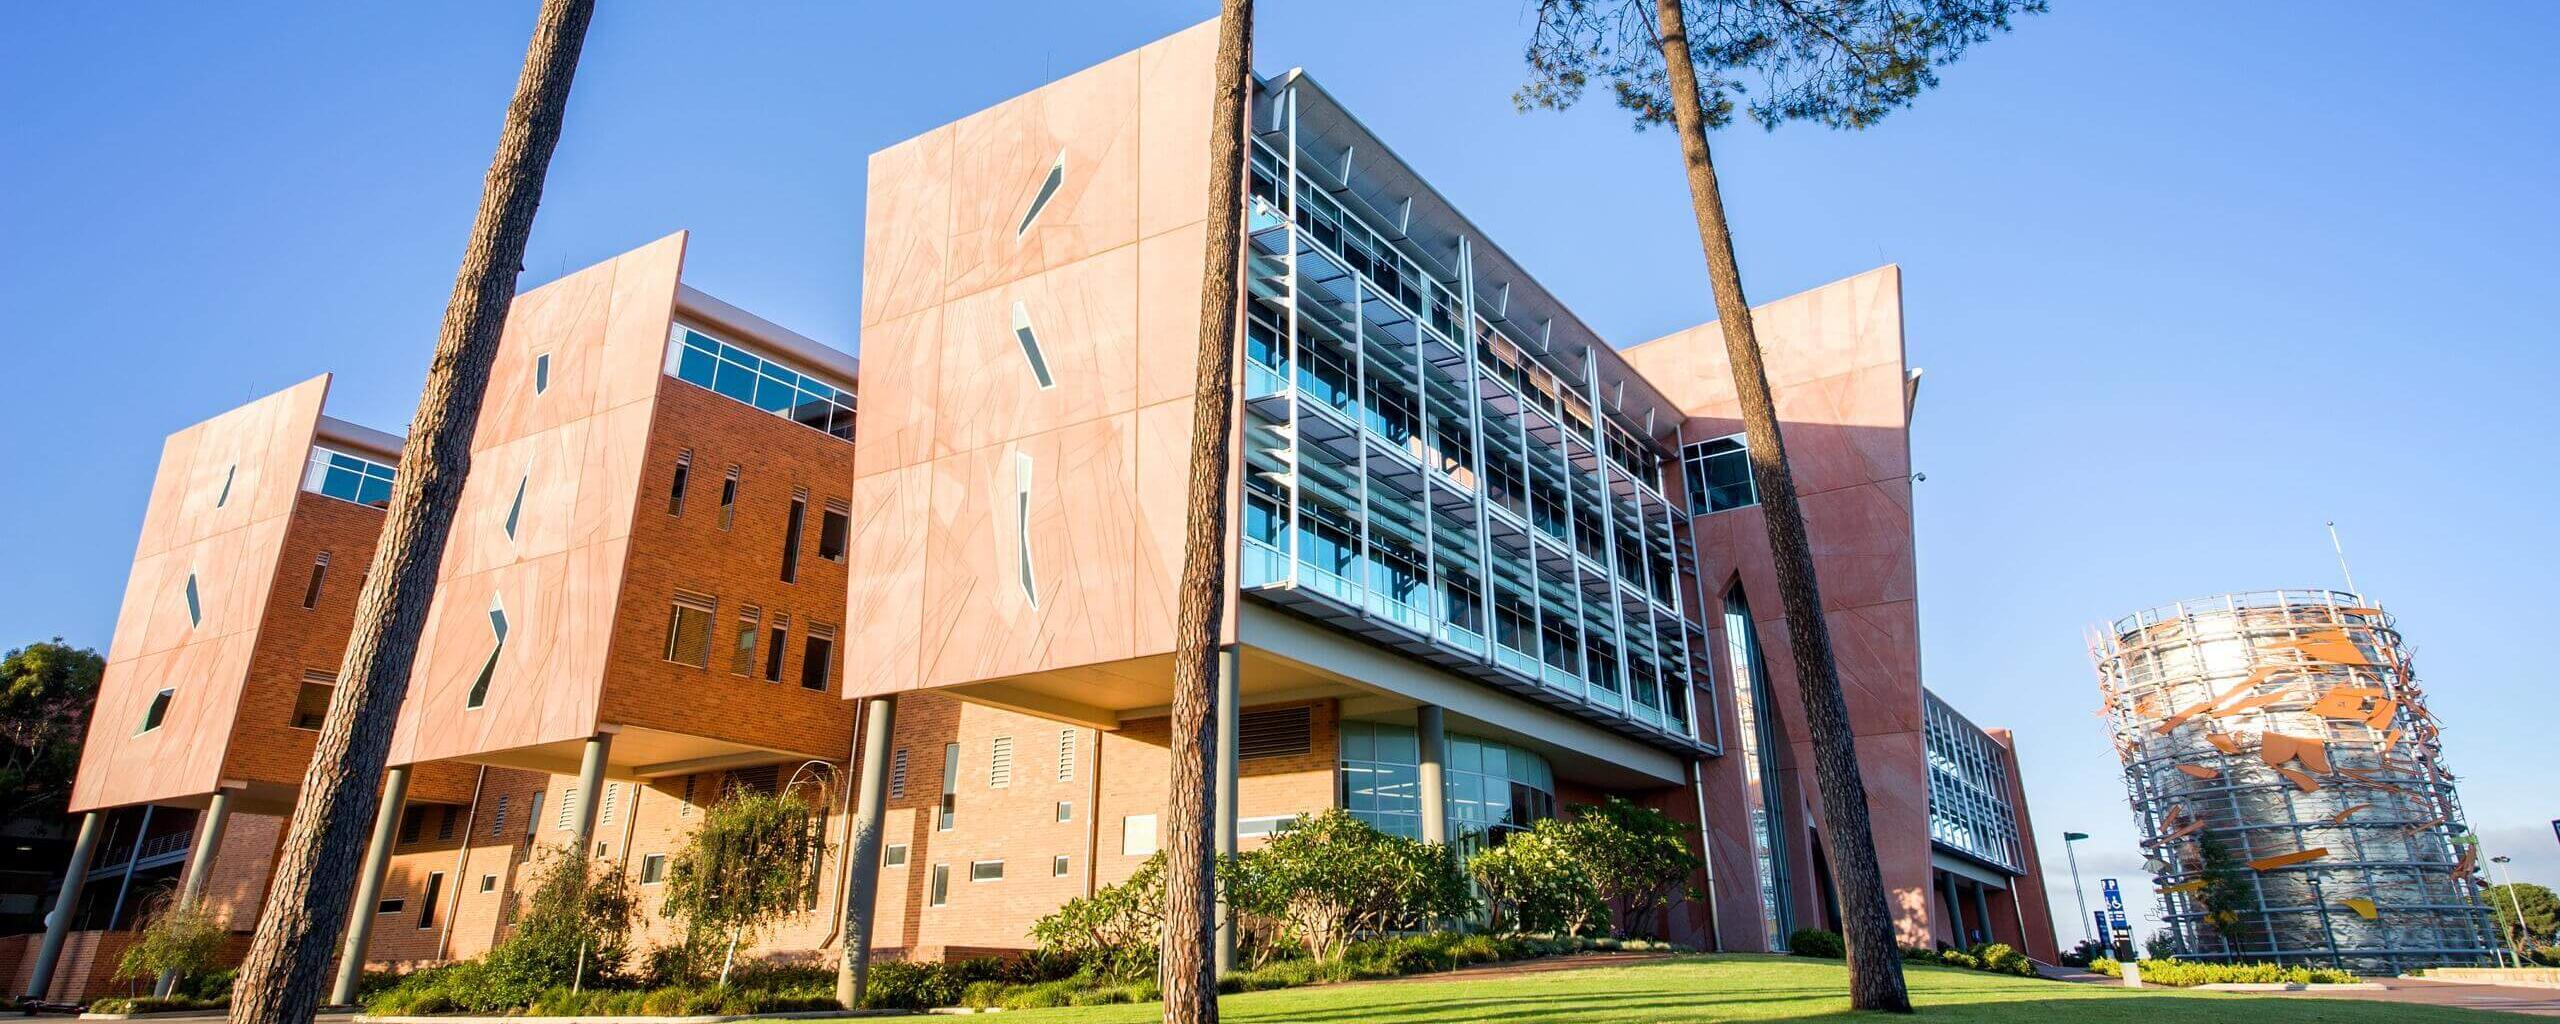 Campus der Curtin University in Perth